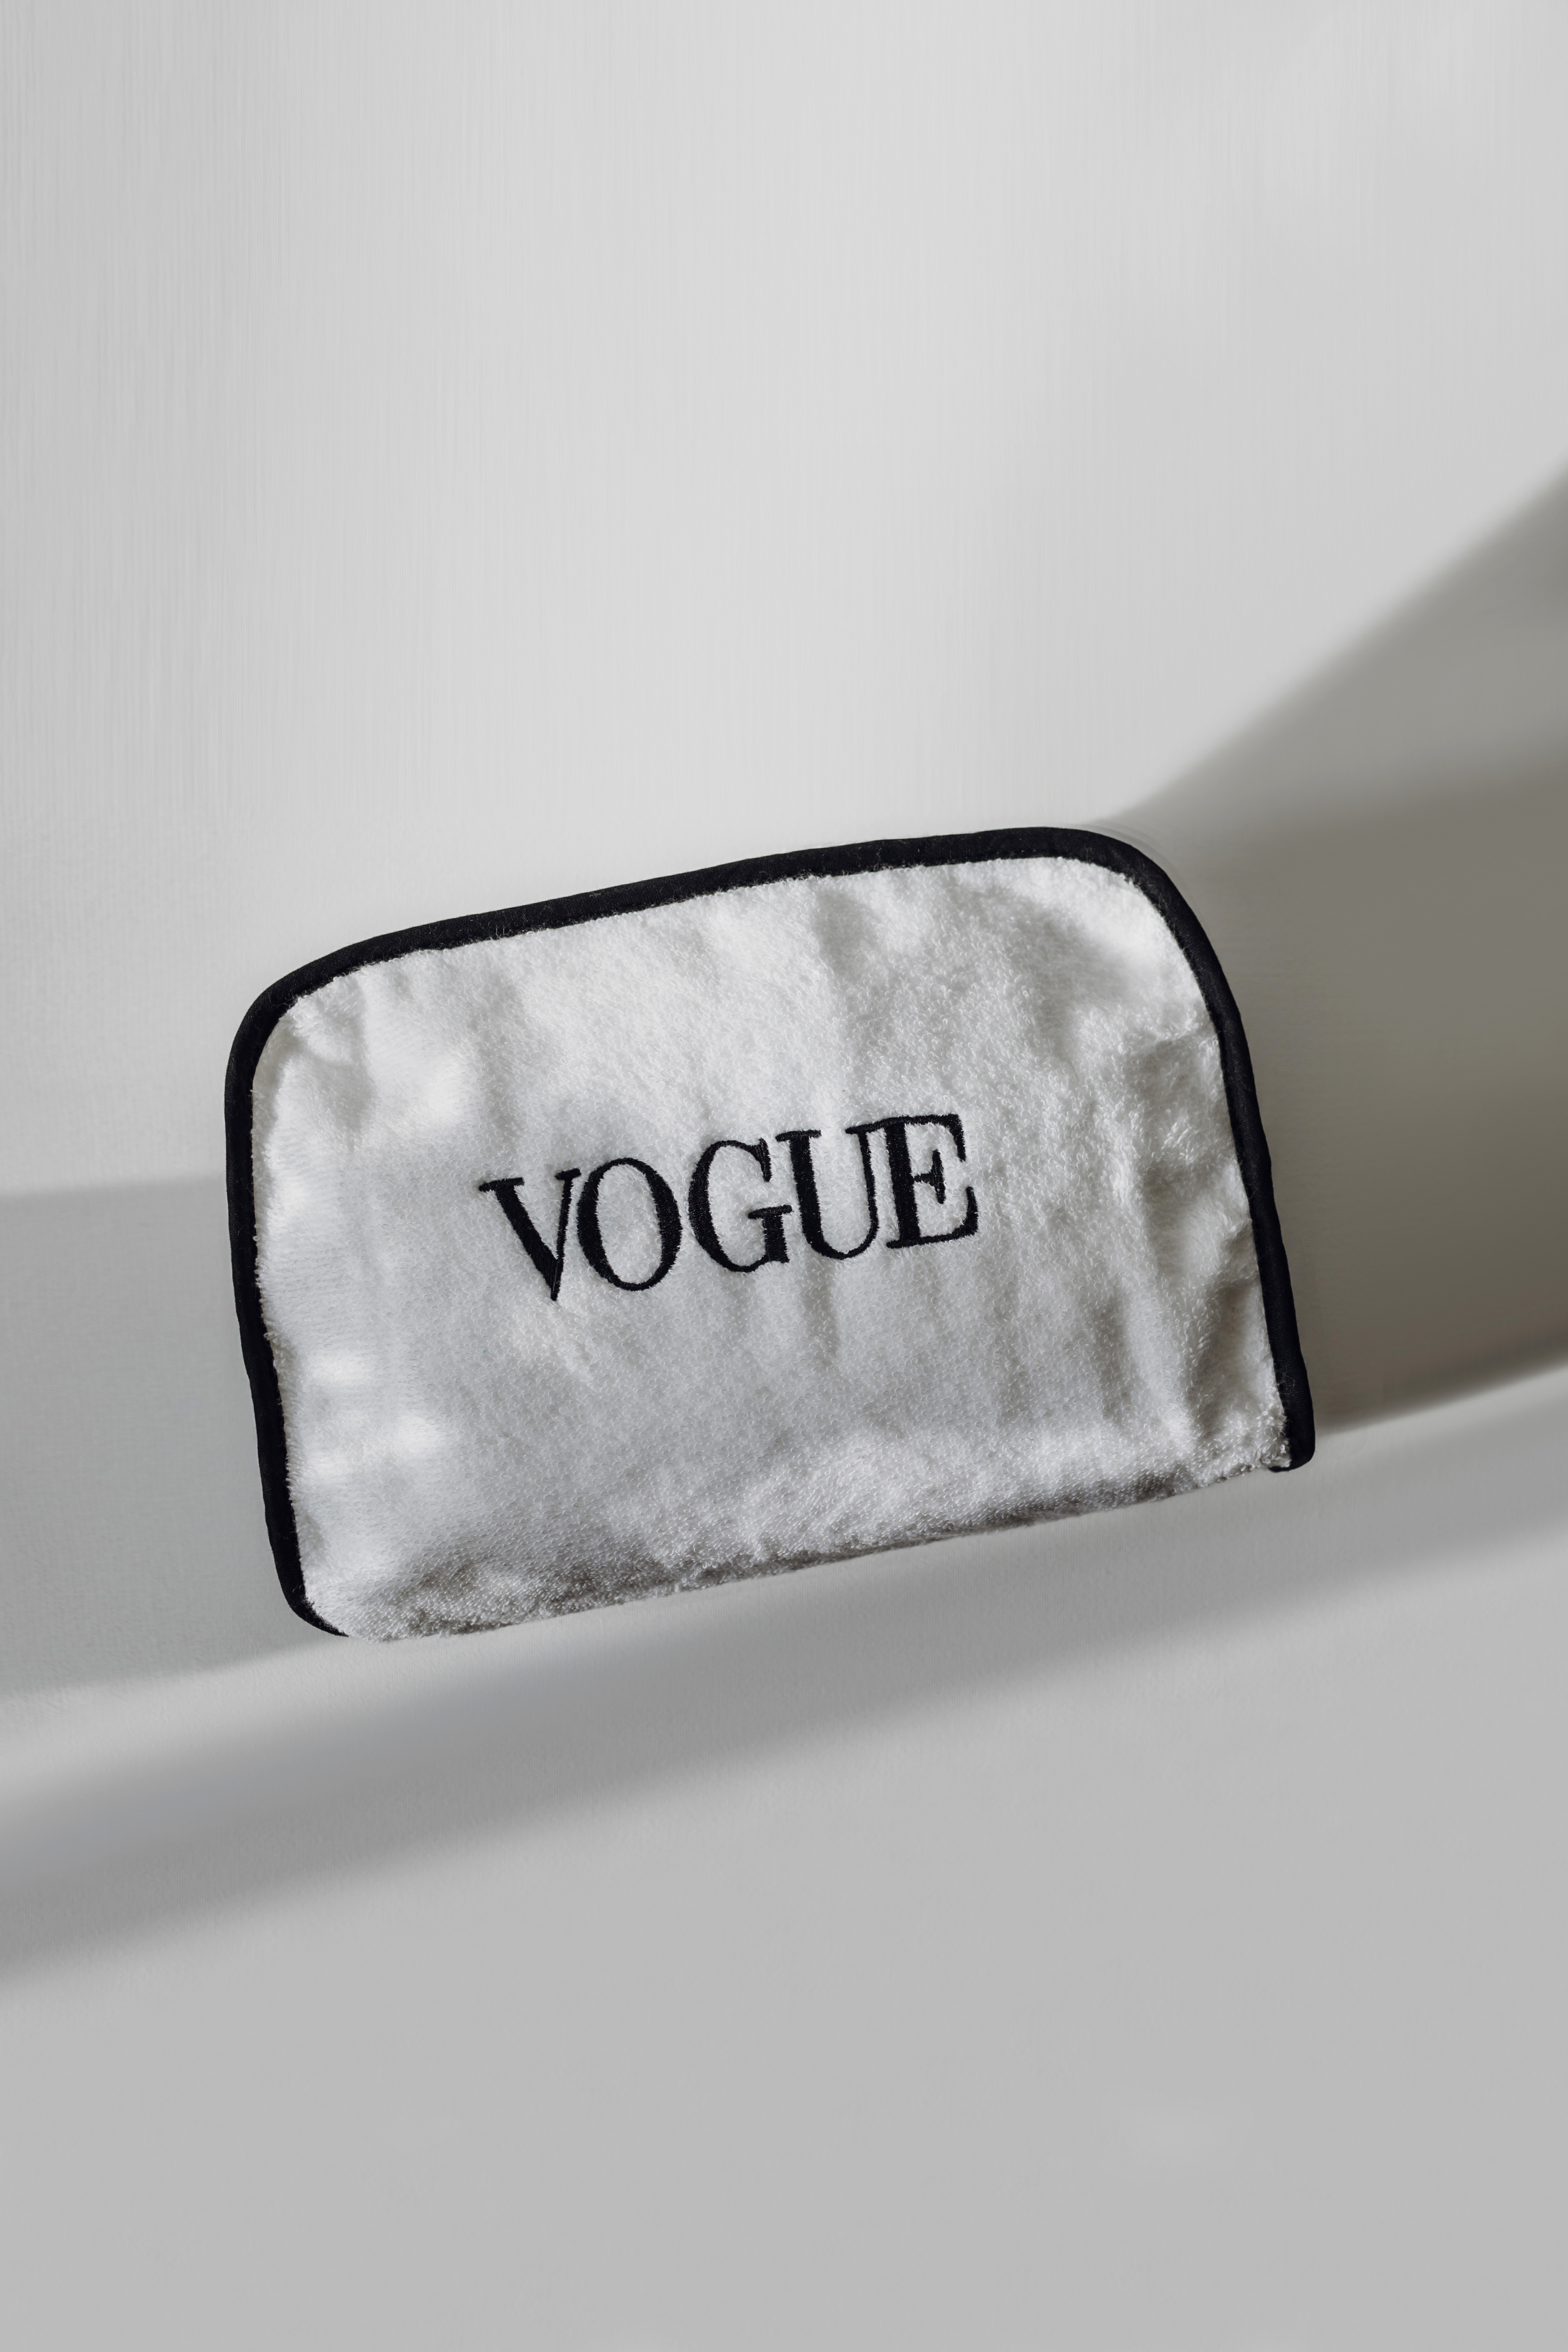 VOGUE Beauty Bag